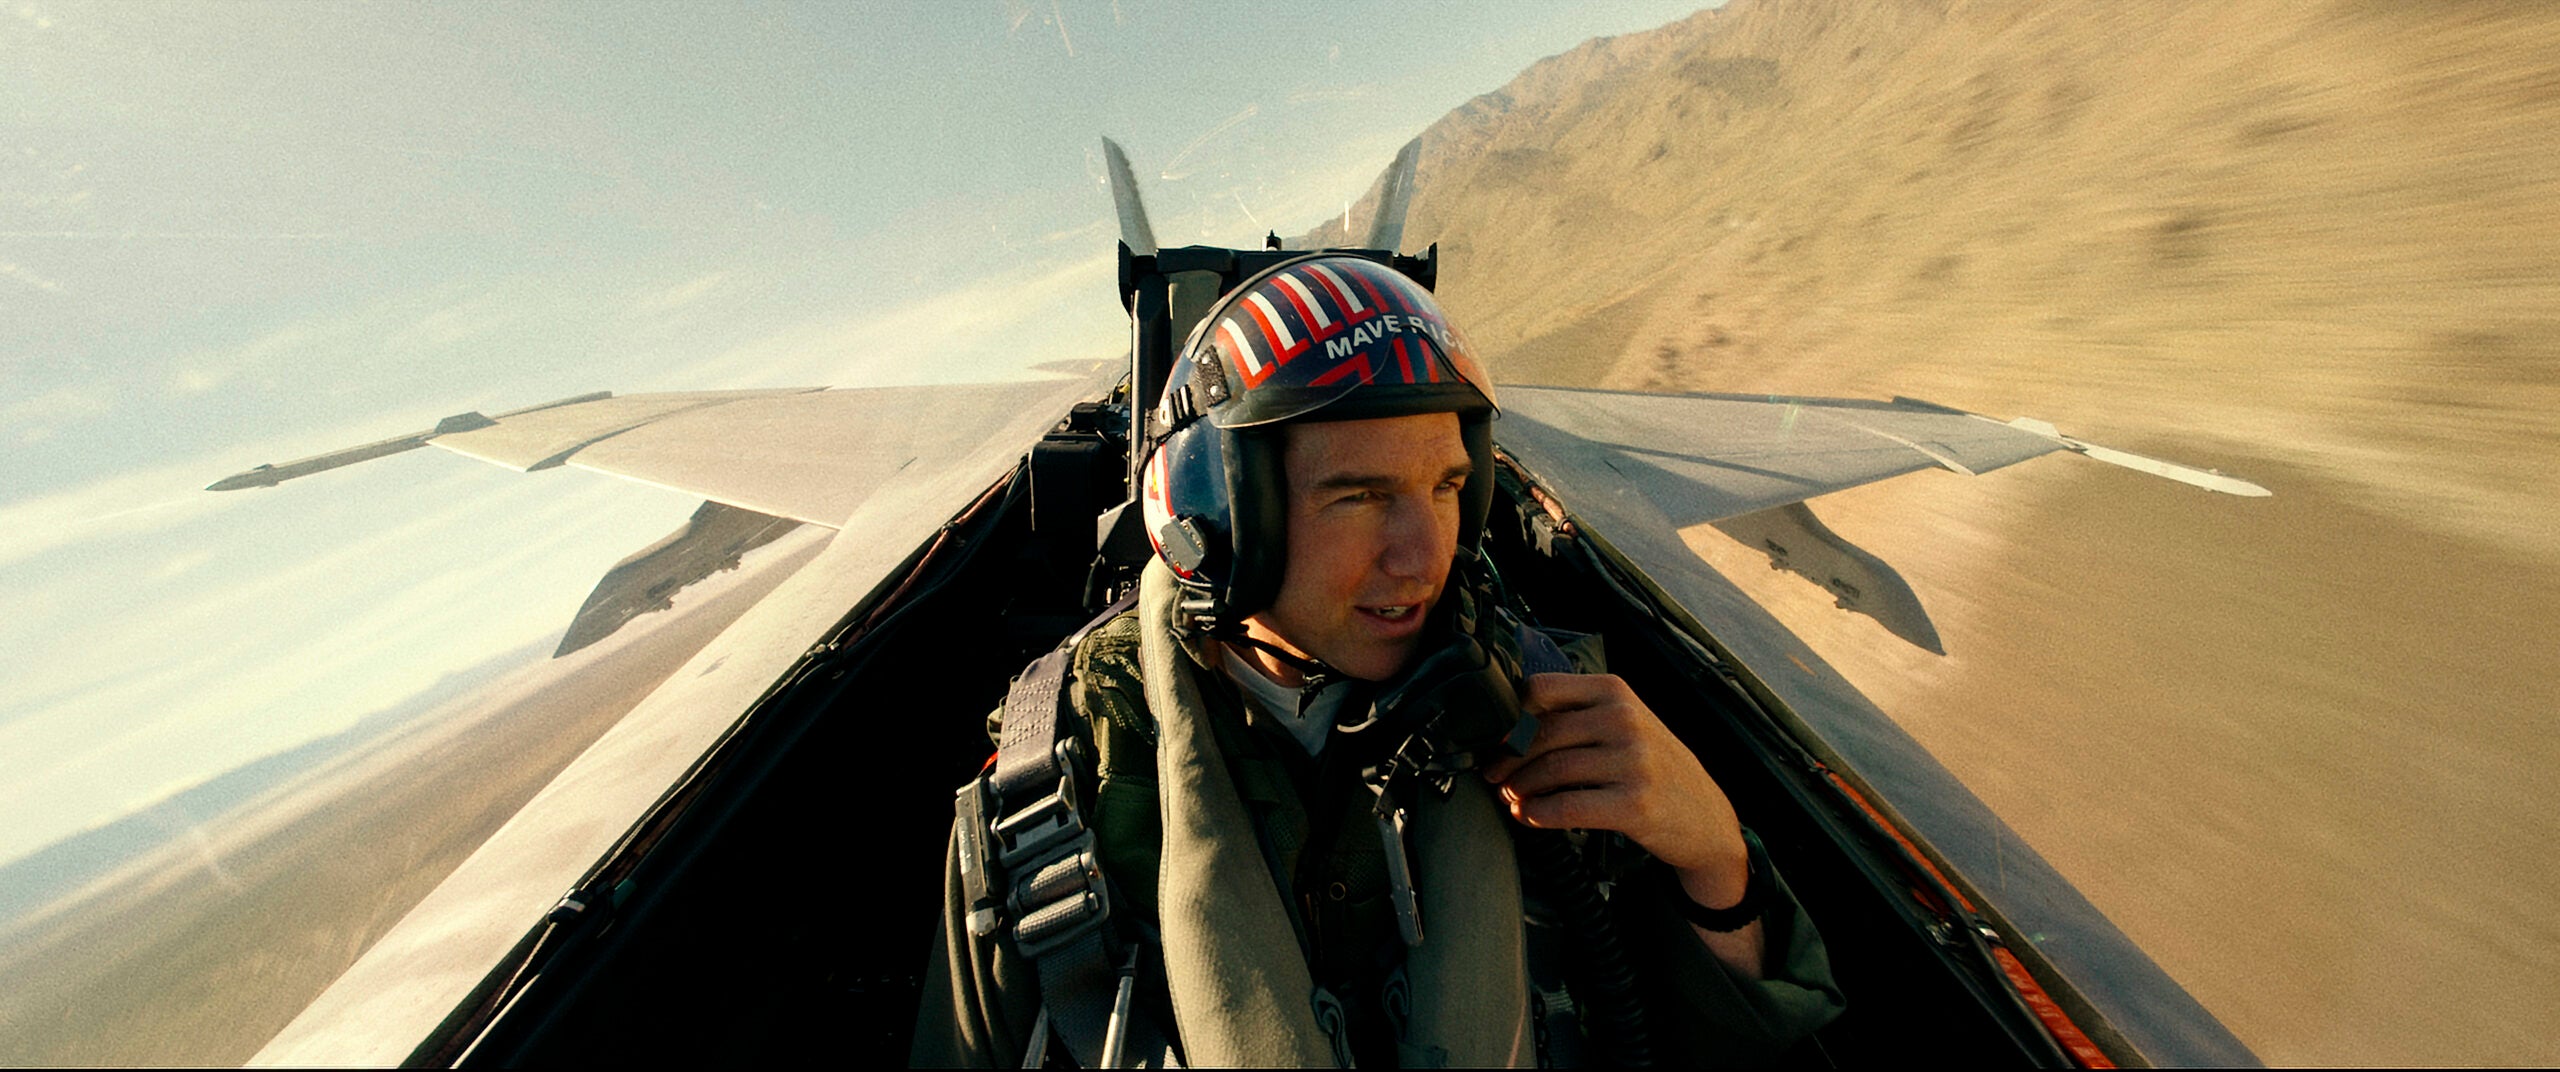 Tom Cruise as Capt. Pete "Maverick" Mitchell in "Top Gun: Maverick."